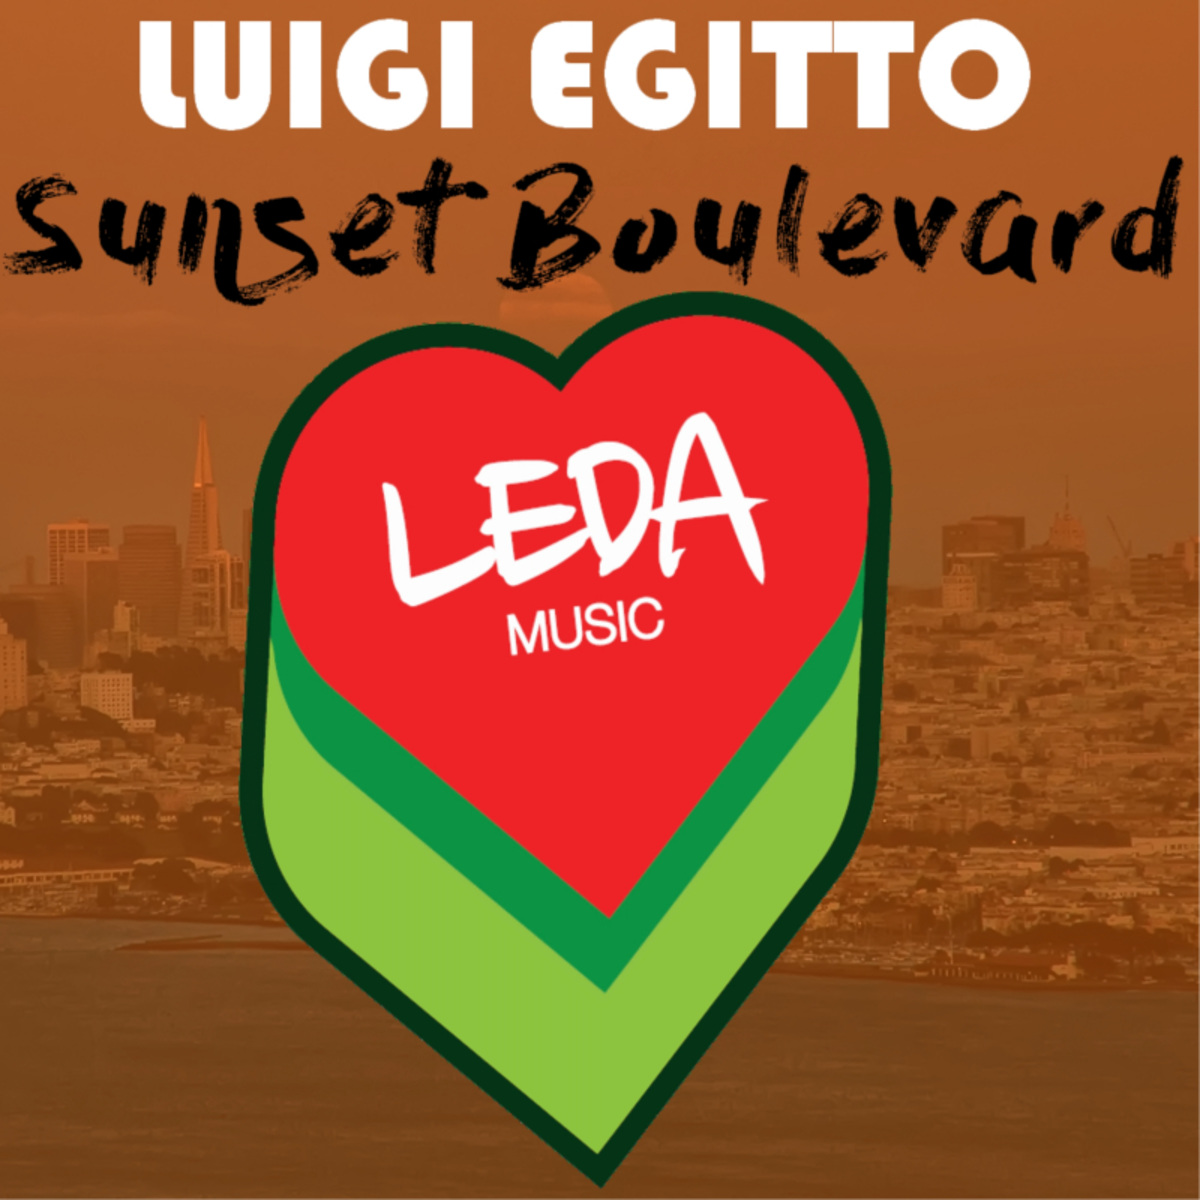 Luigi Egitto - Sunset Boulevard / Leda Music